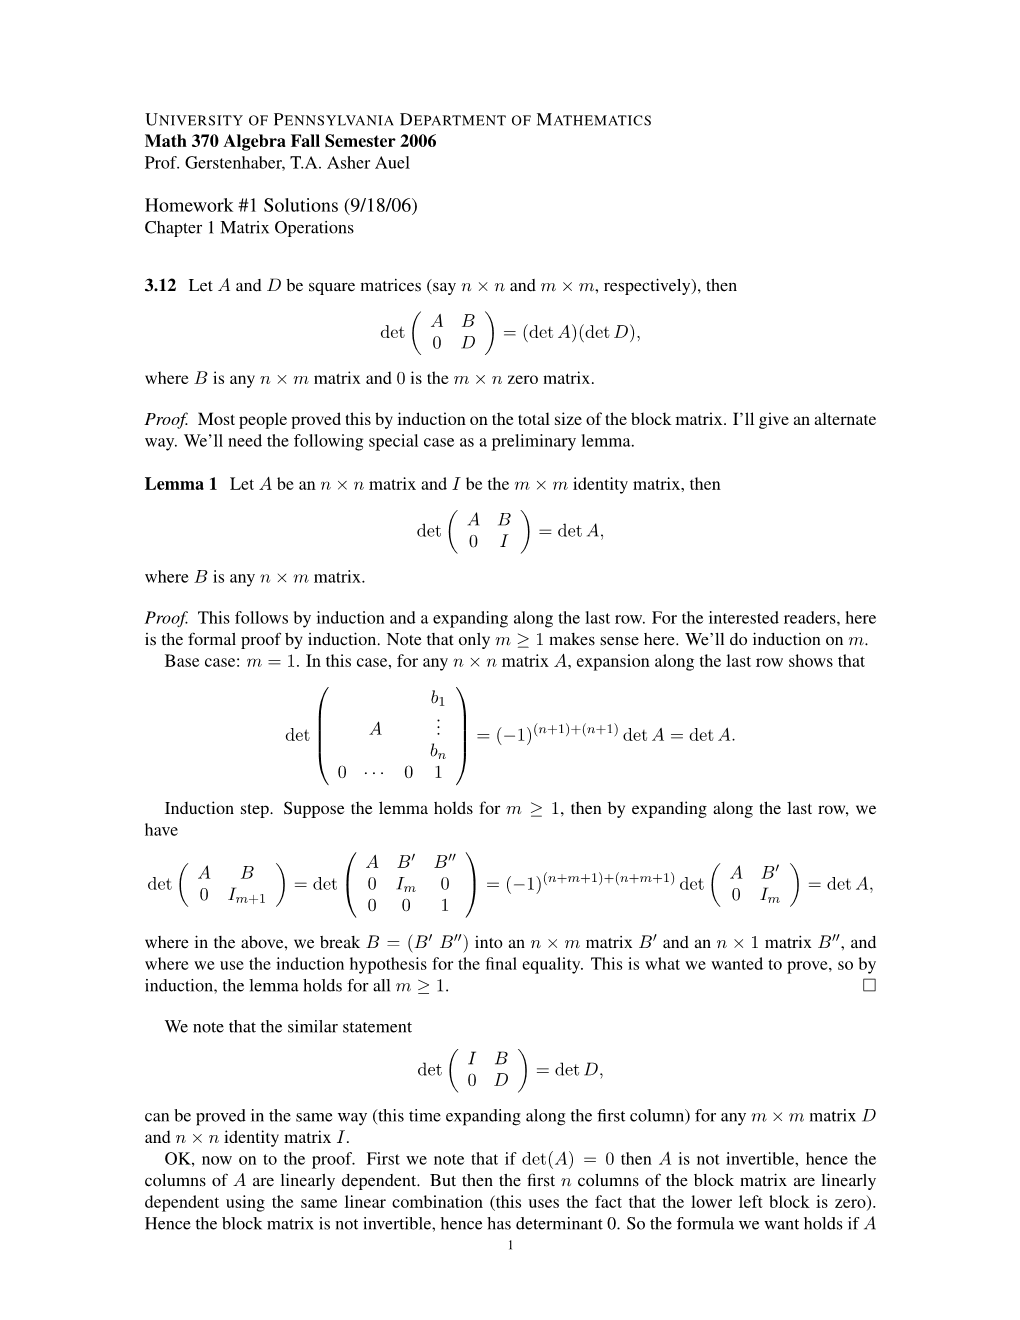 Homework #1 Solutions (9/18/06) Chapter 1 Matrix Operations